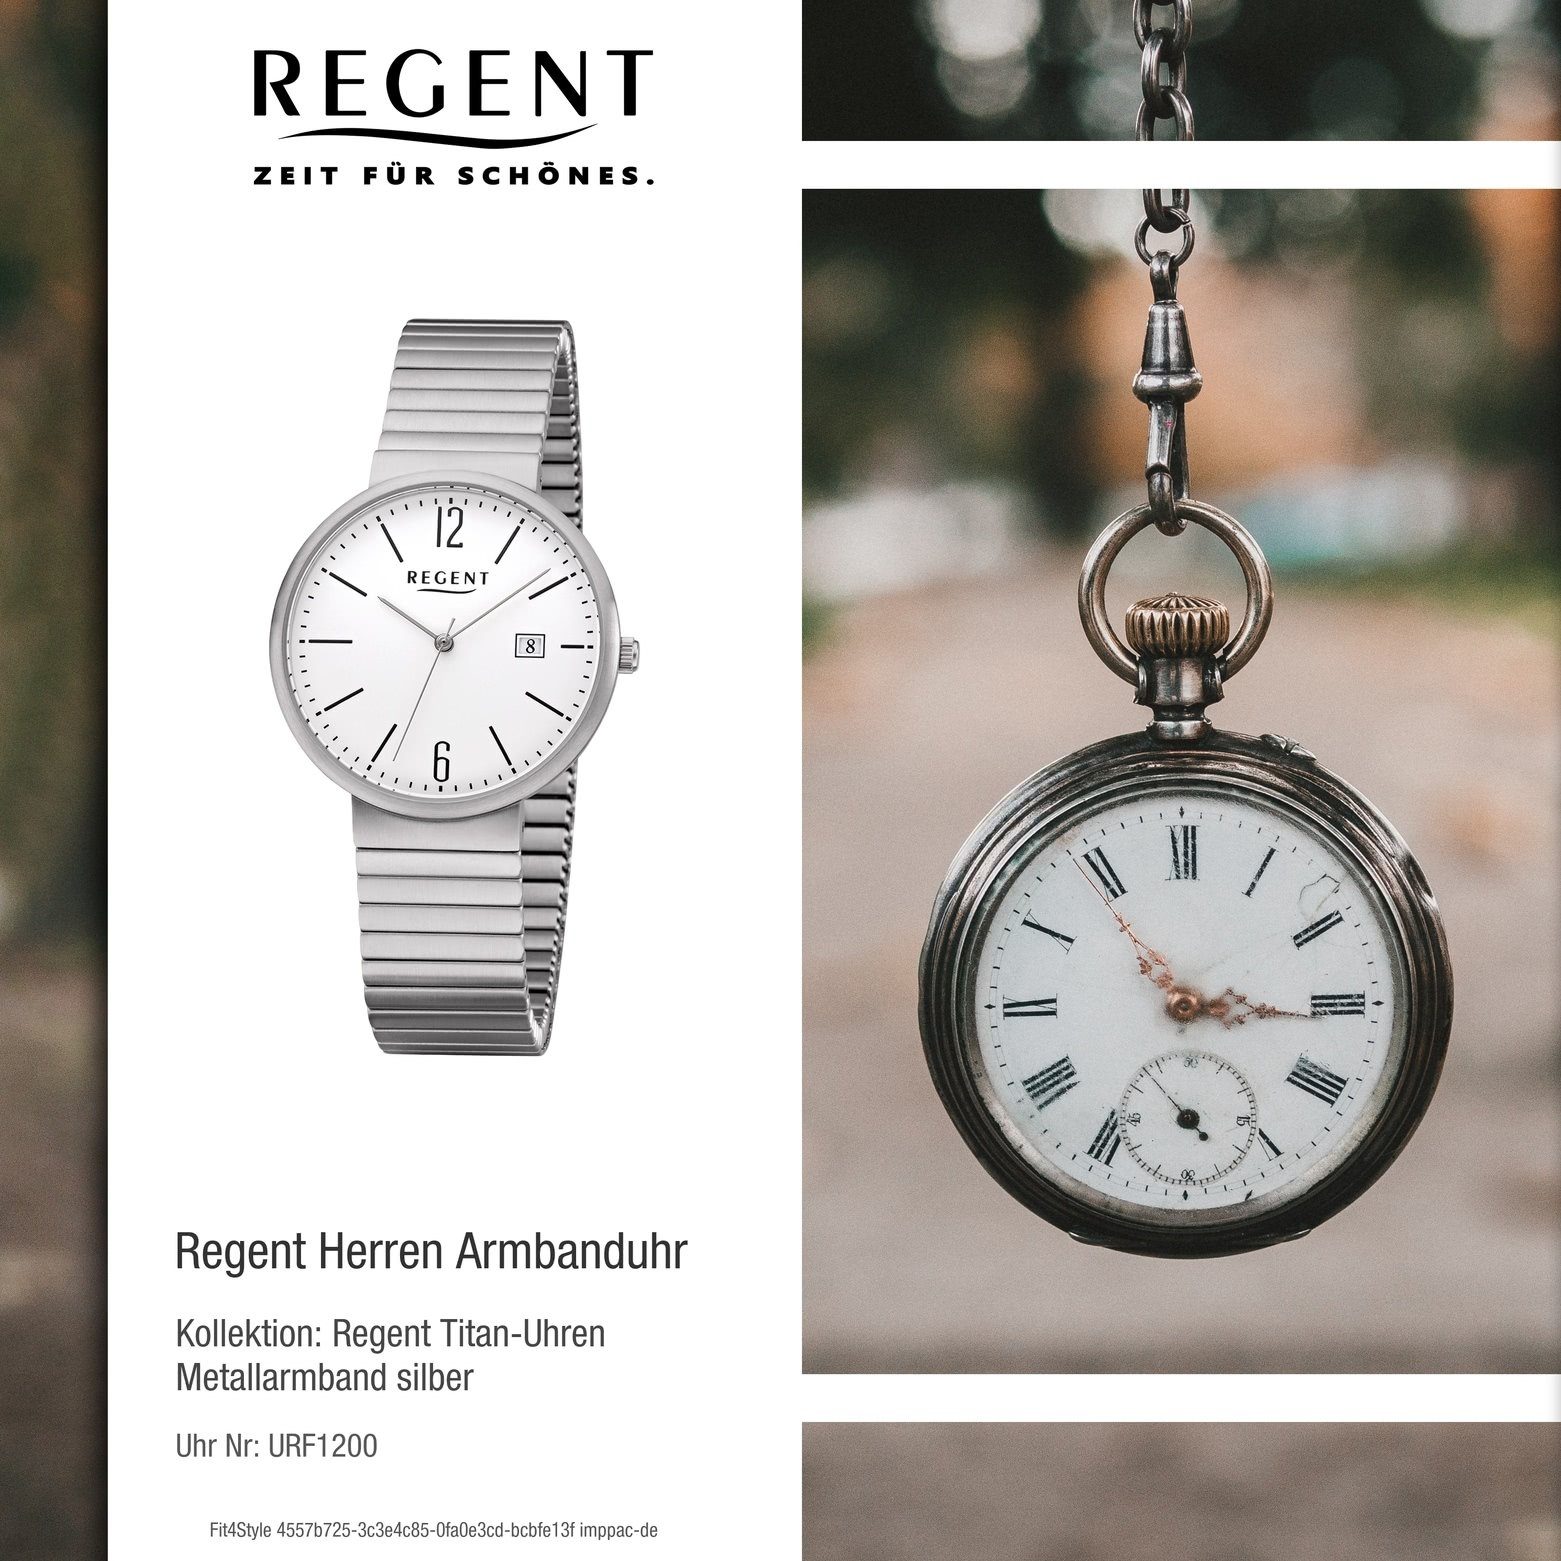 Metallarmband mittel Quarz, Armbanduhr Regent Metall rund, Quarzuhr Uhr Regent (ca. Herren Herren F-1200 38mm),